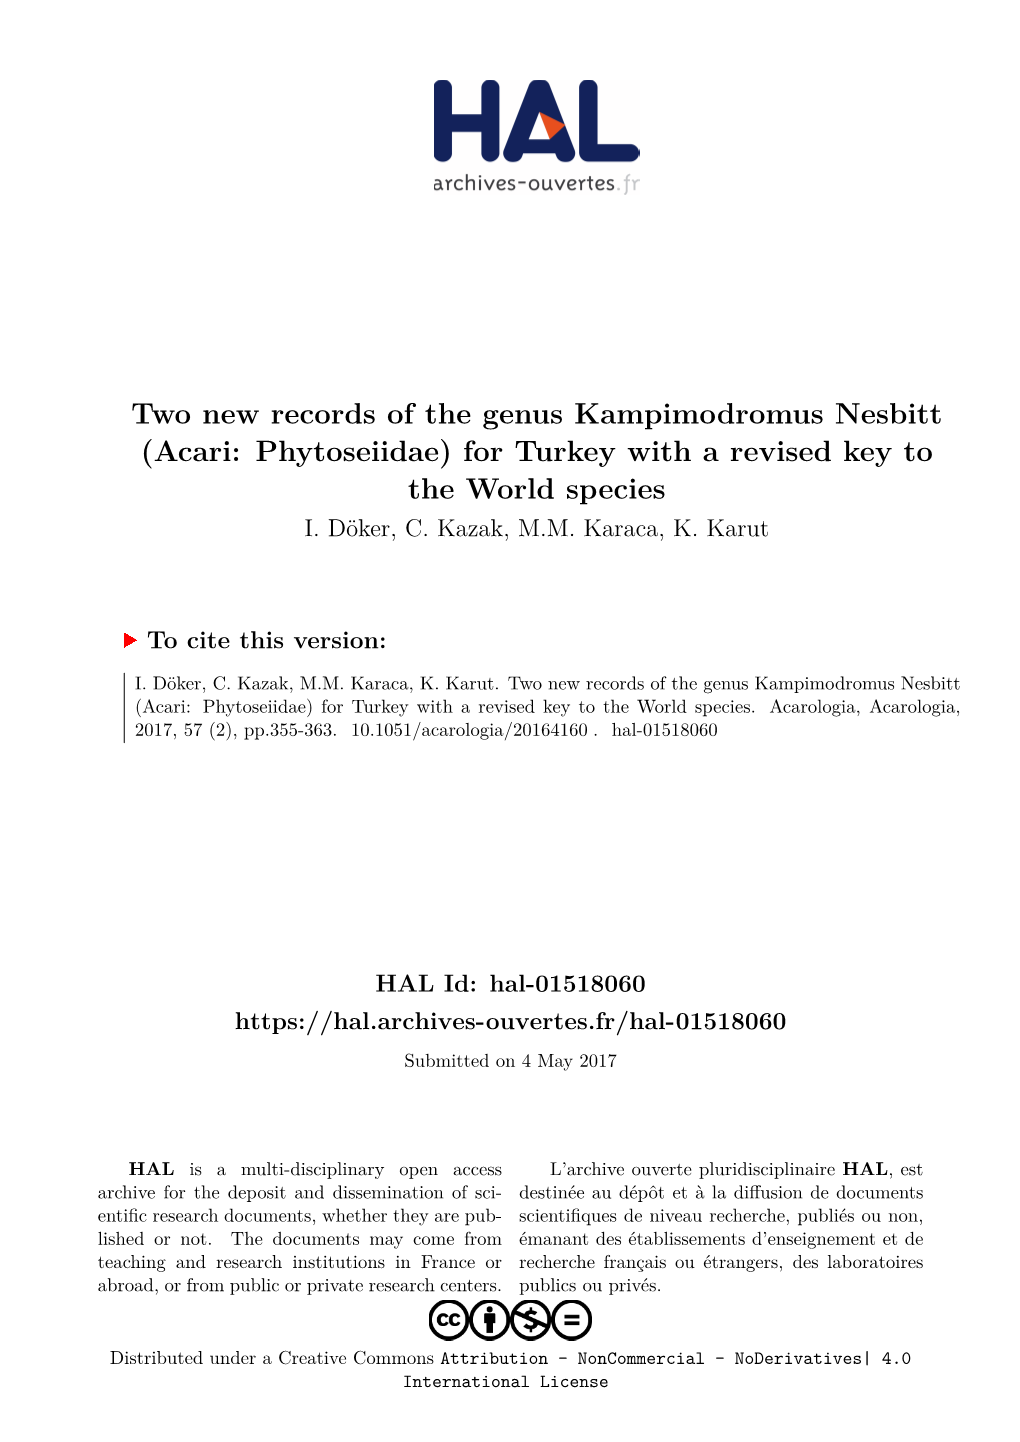 Two New Records of the Genus Kampimodromus Nesbitt (Acari: Phytoseiidae) for Turkey with a Revised Key to the World Species I